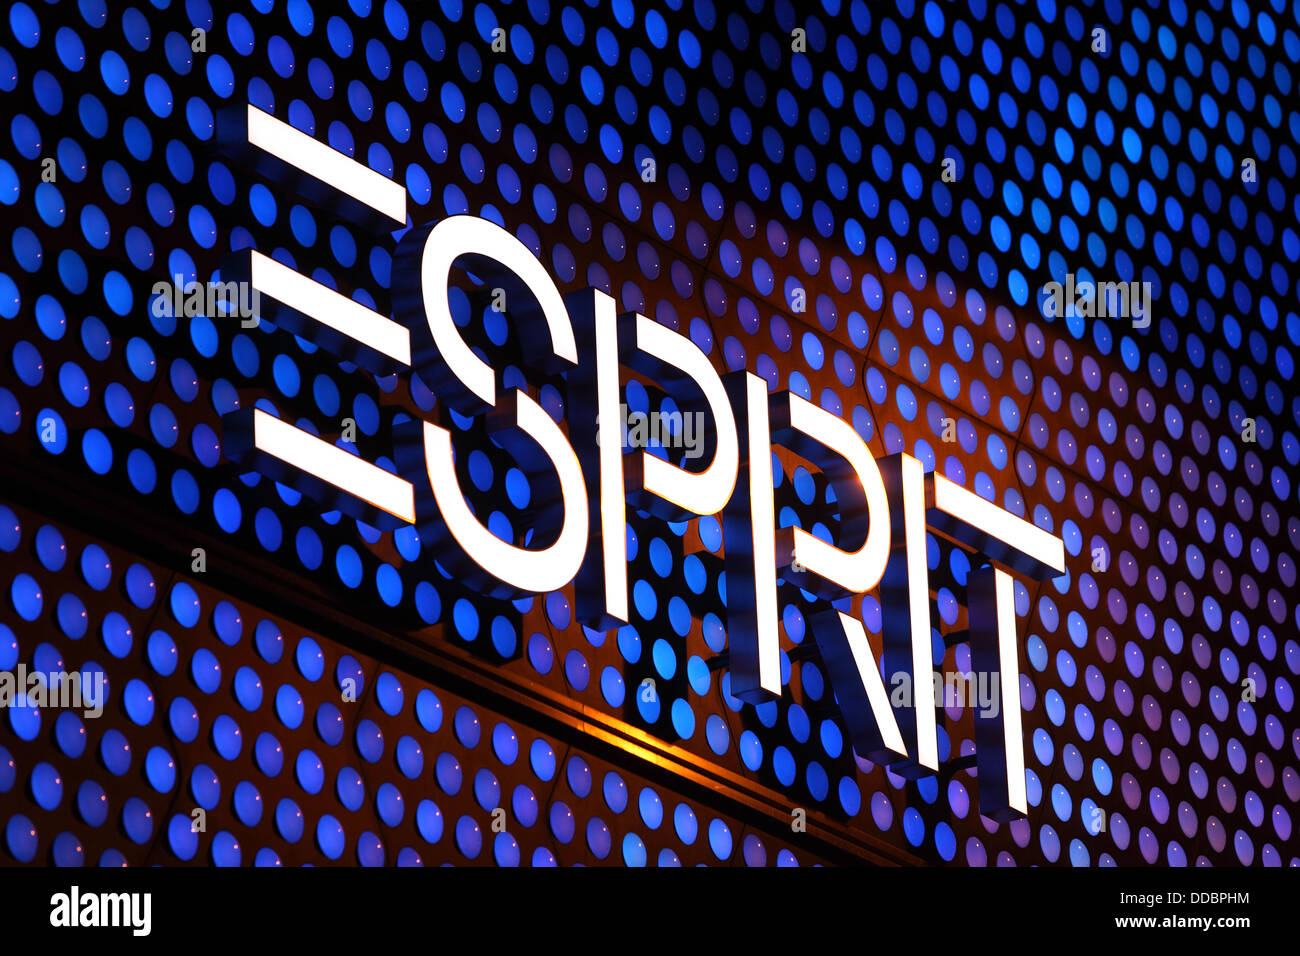 Hong Kong, China, logo of the clothing manufacturer Esprit Stock Photo